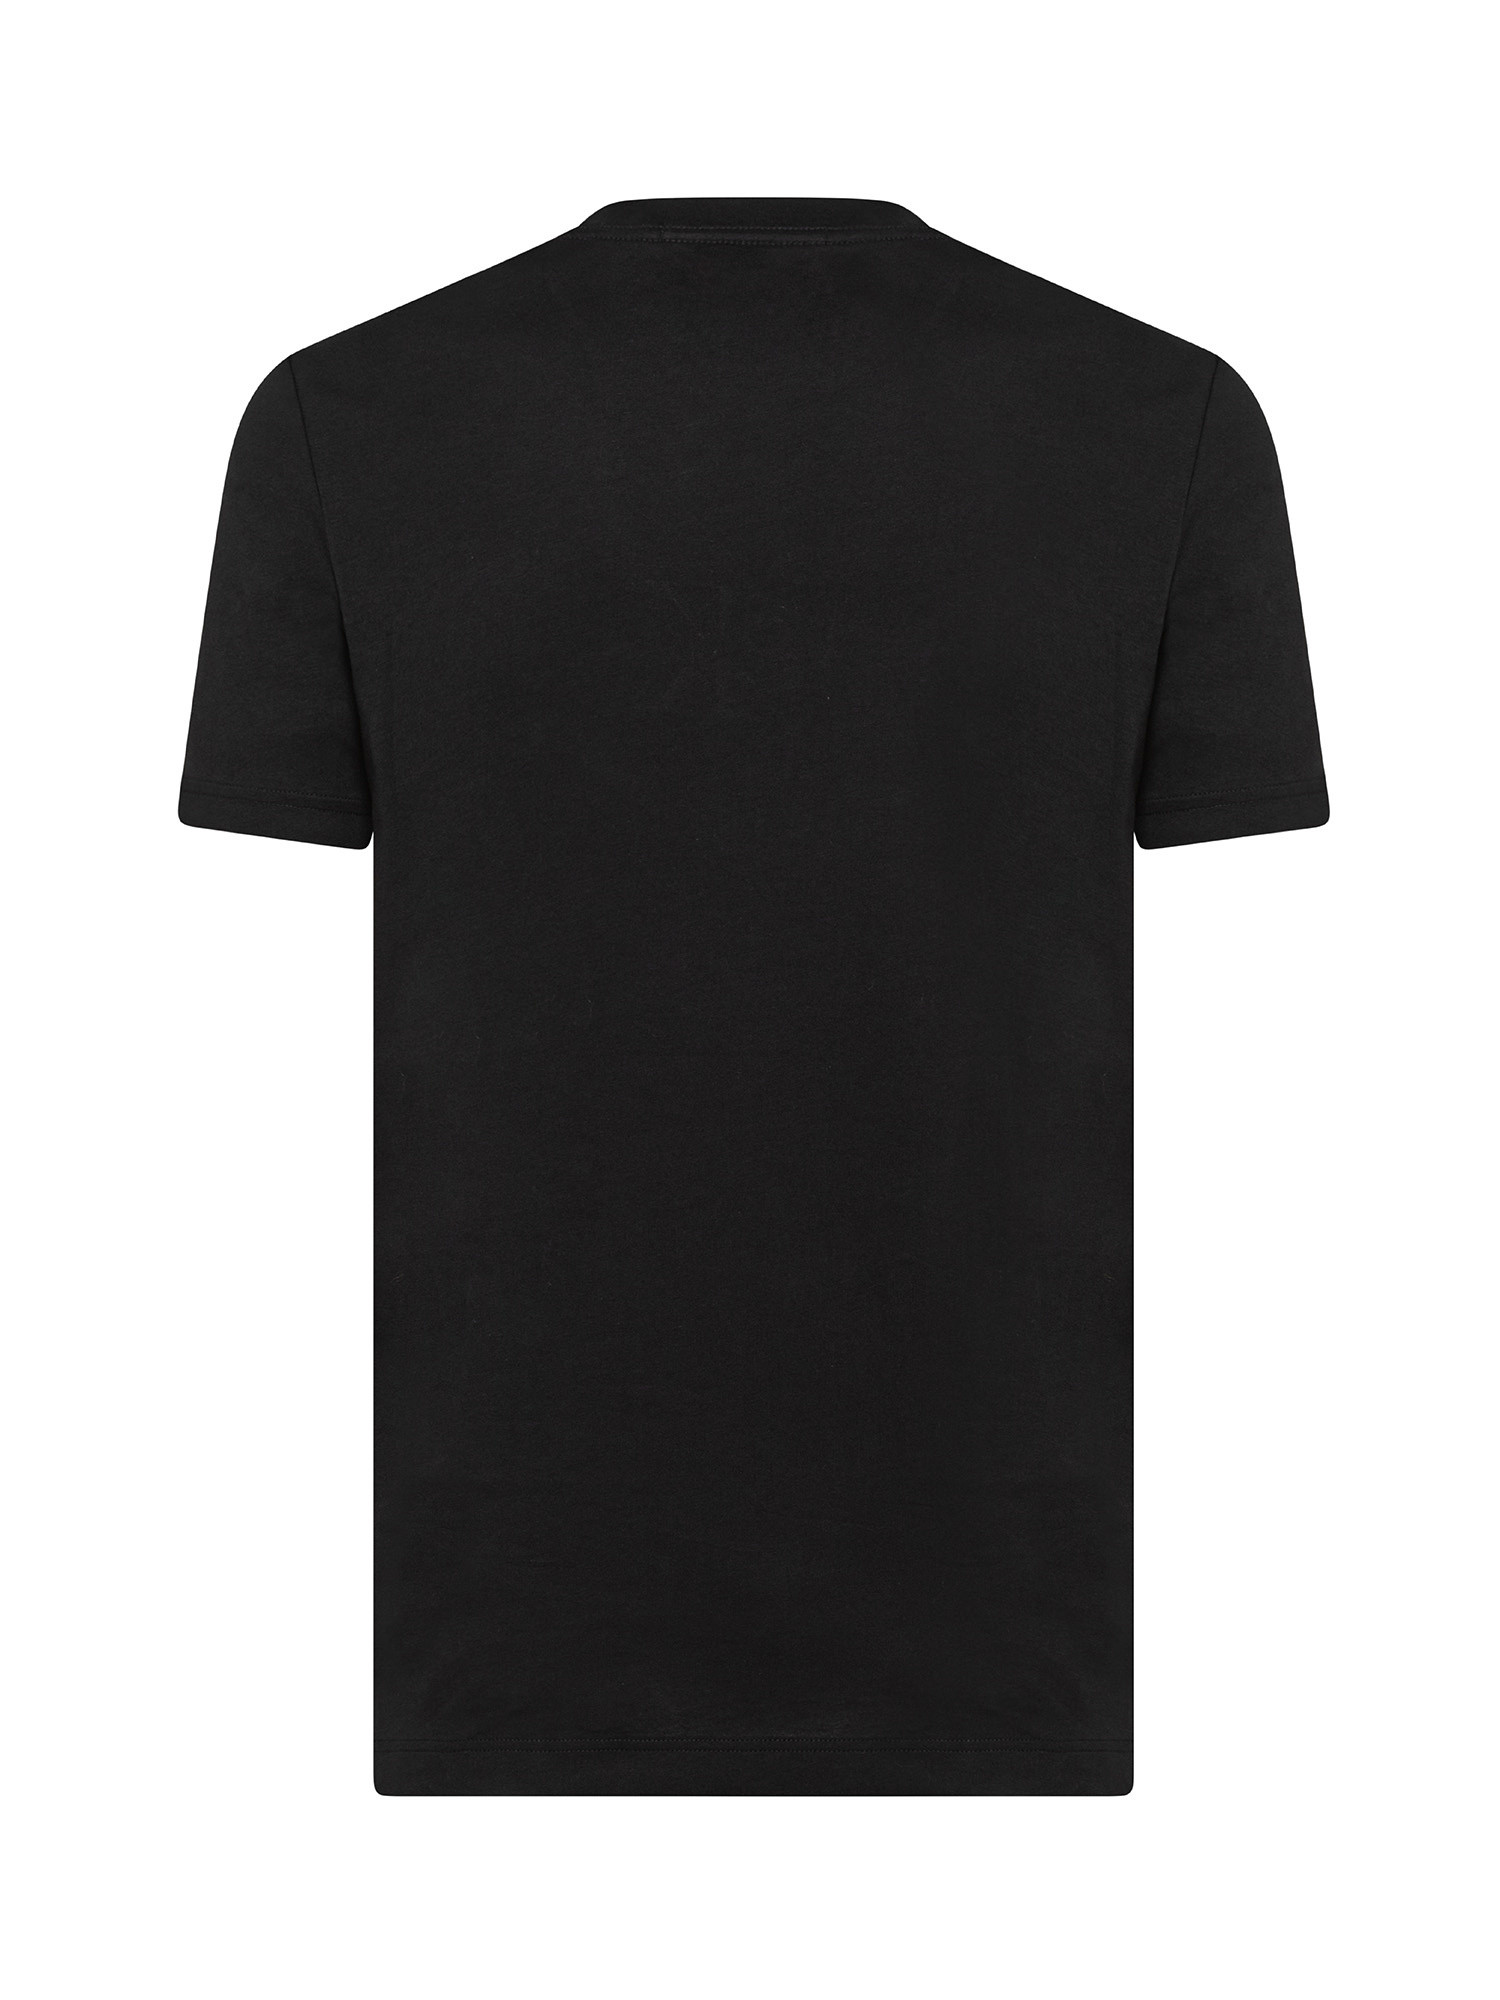 Cotton T-shirt with logo, Black, large image number 1